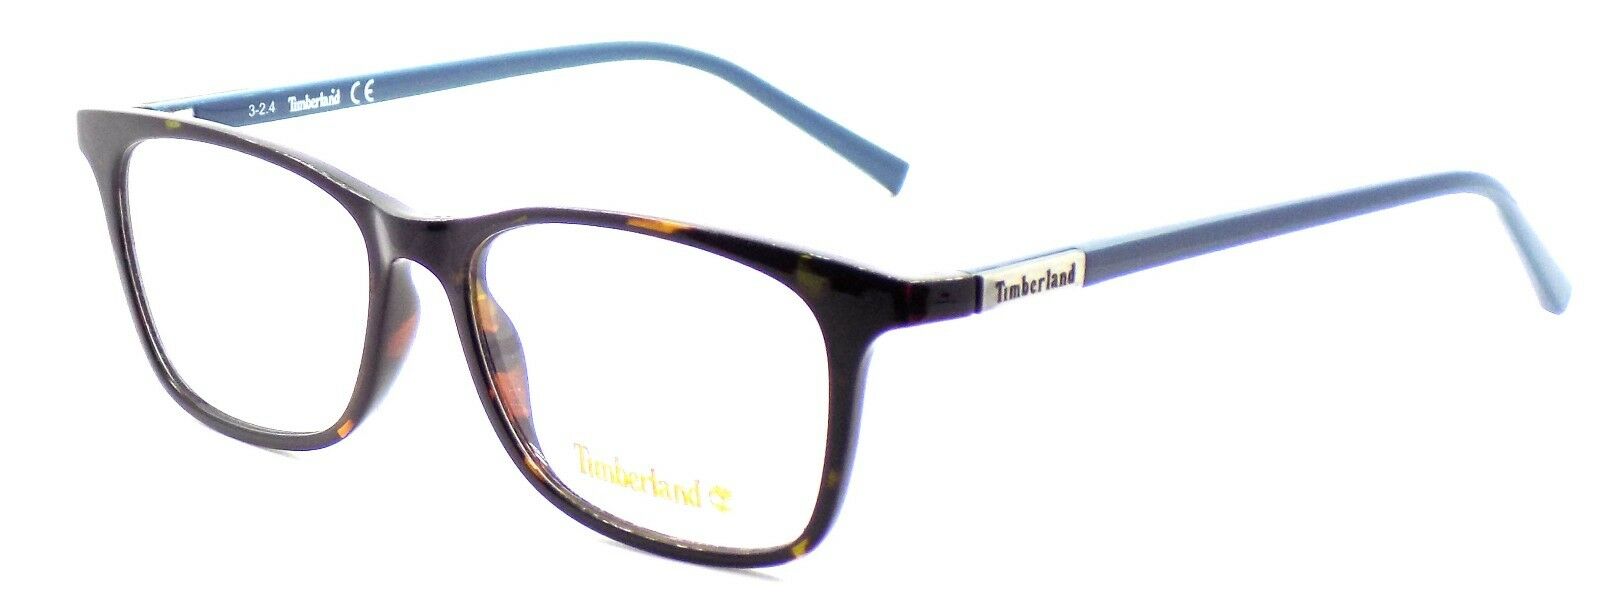 1-TIMBERLAND TB1314 052 Eyeglasses Frames 52-15-140 Dark Havana Brown + CASE-664689682805-IKSpecs